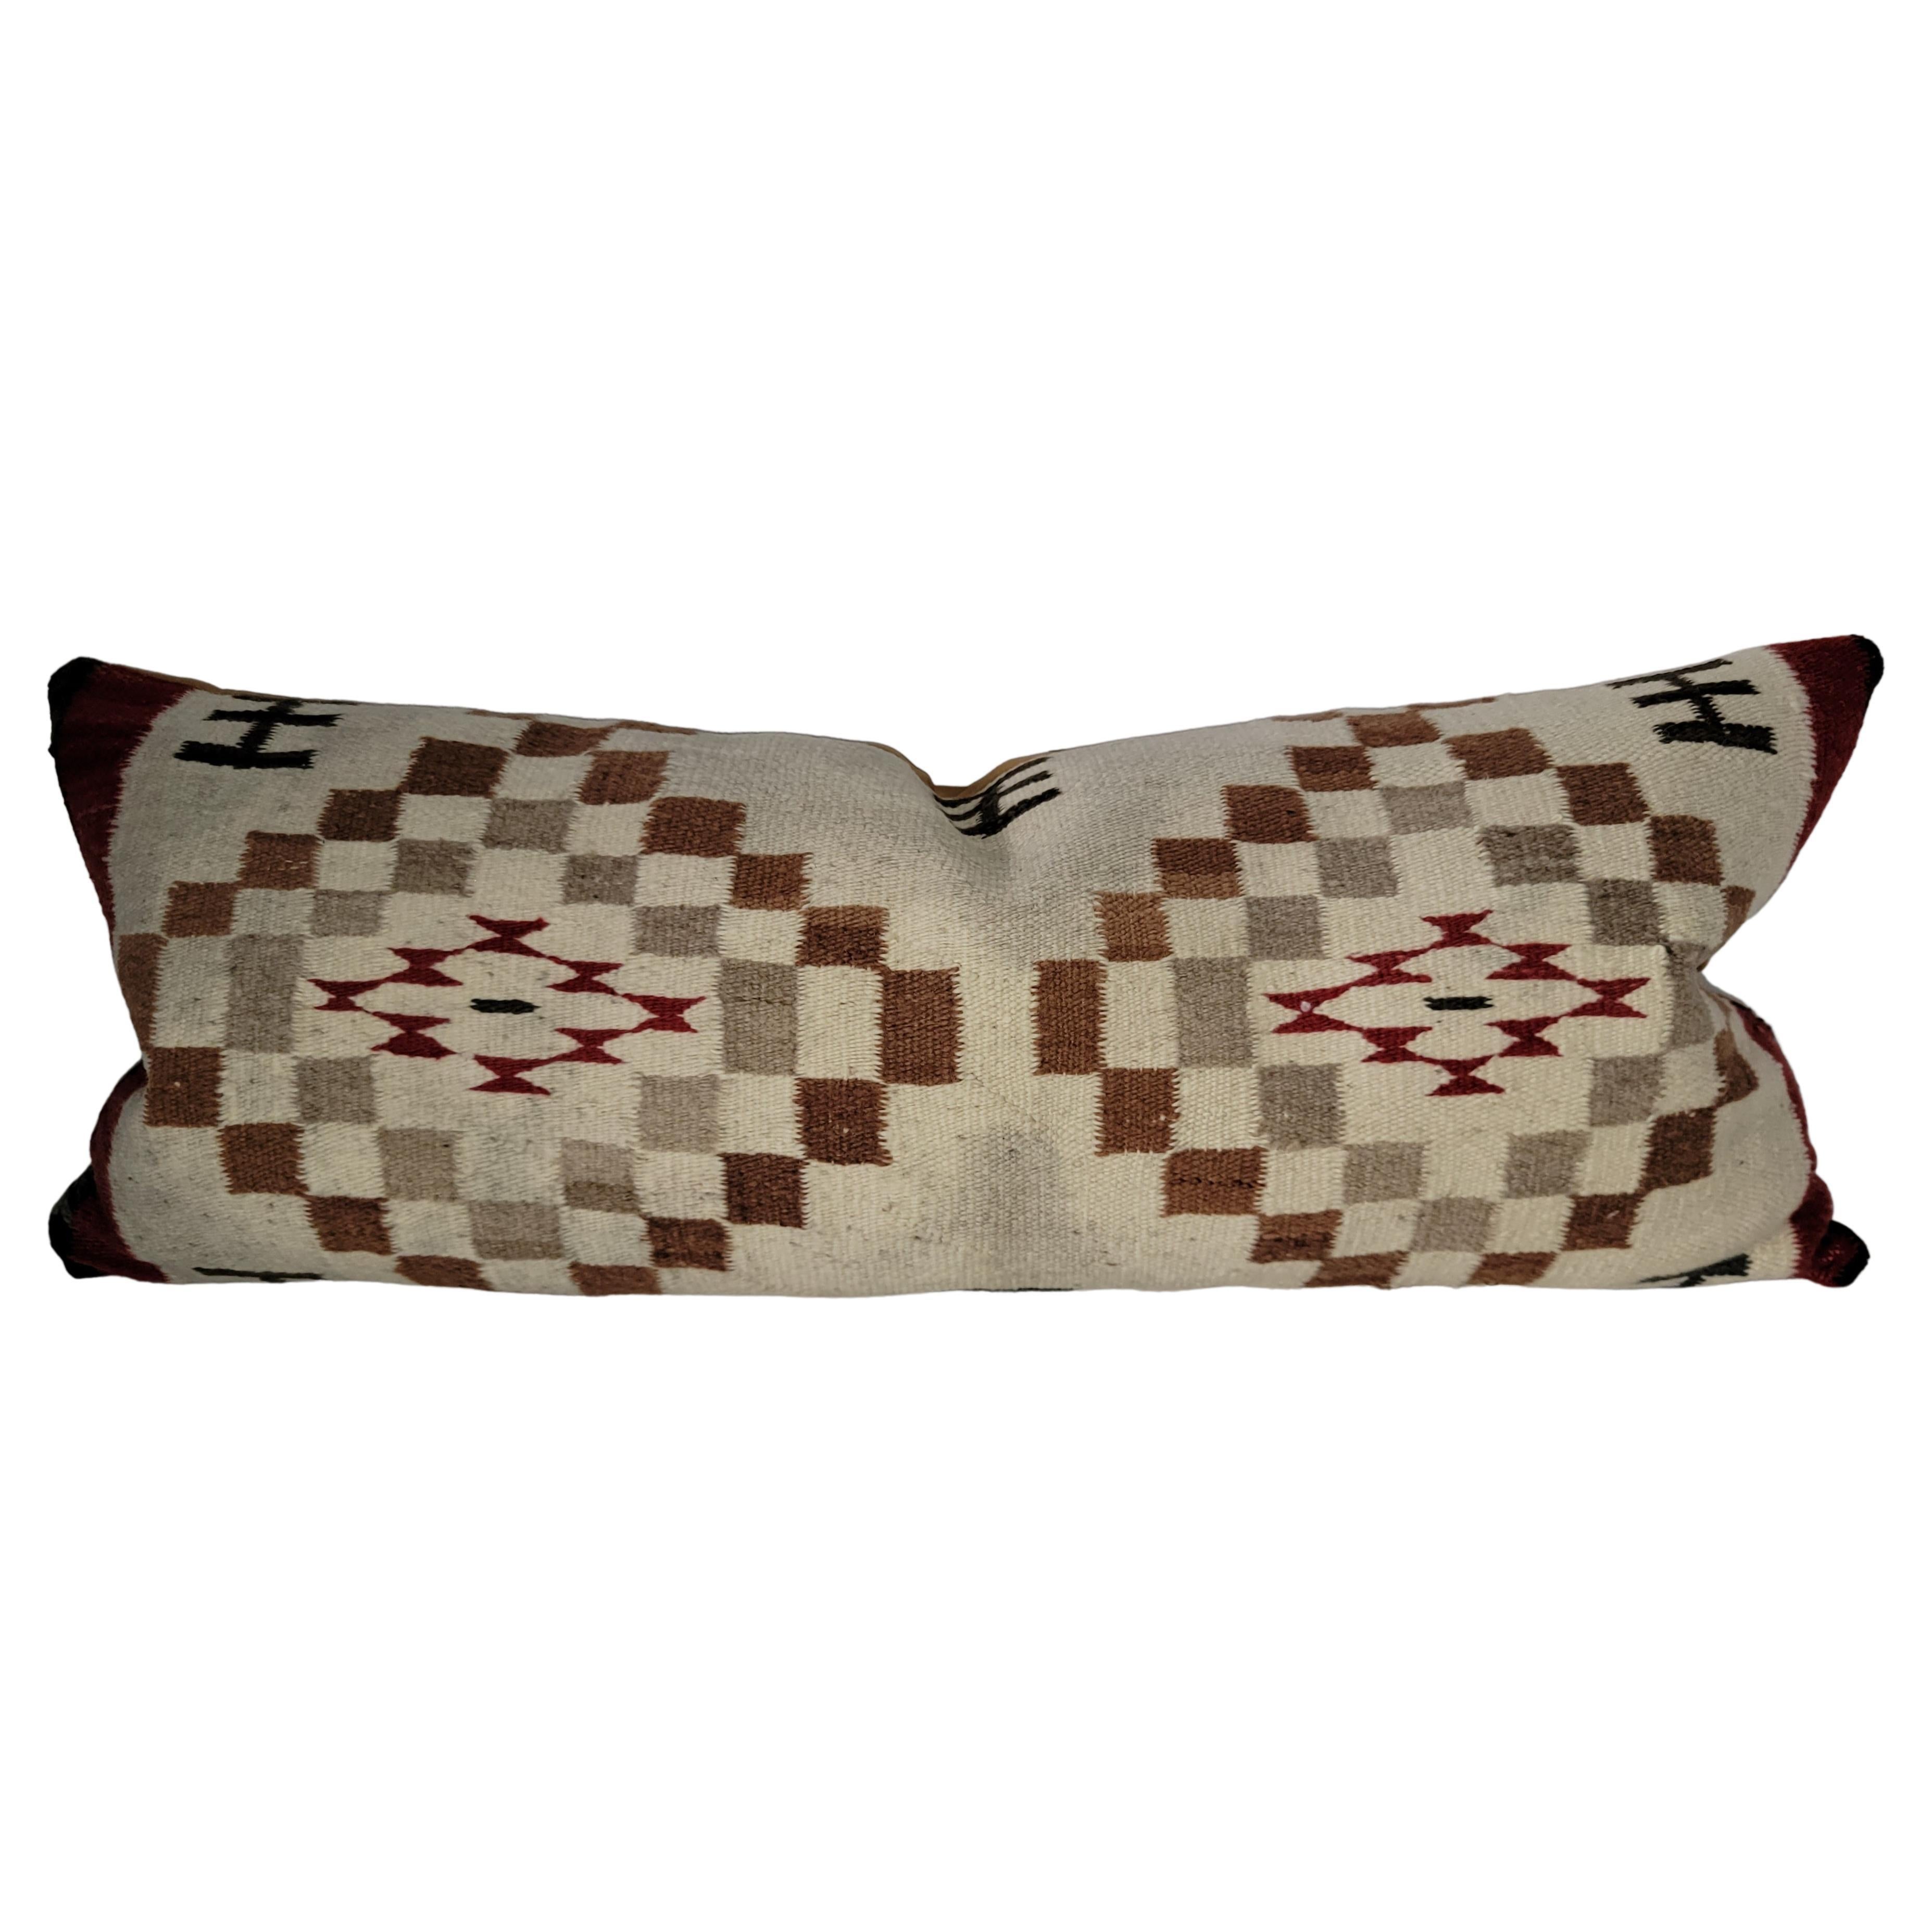 Indian Weaving Bolster Pillow. Zippered sham. Feather and down insert.